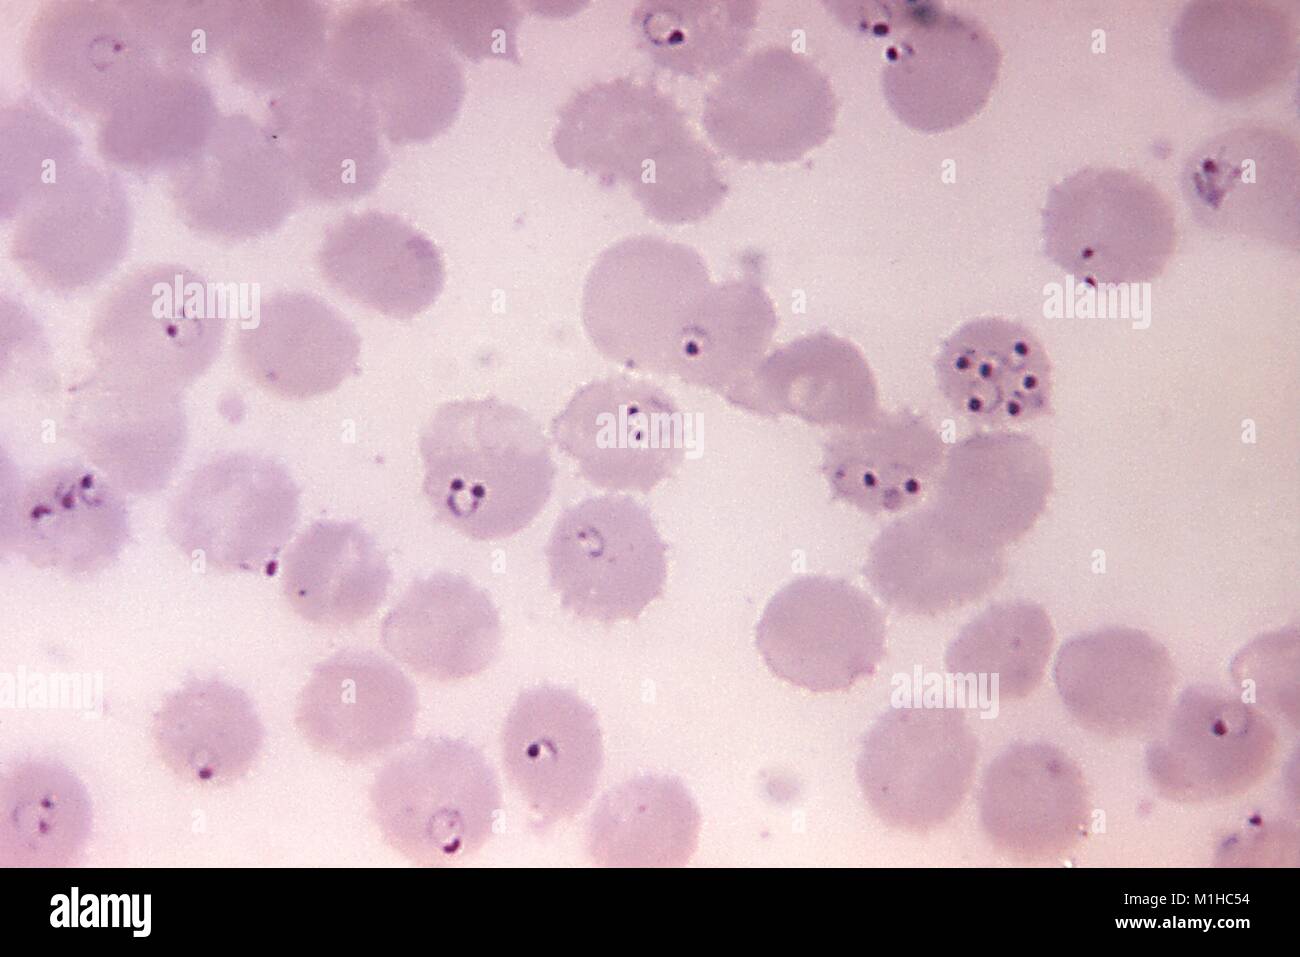 Plasmodium falciparum - Wikipedia